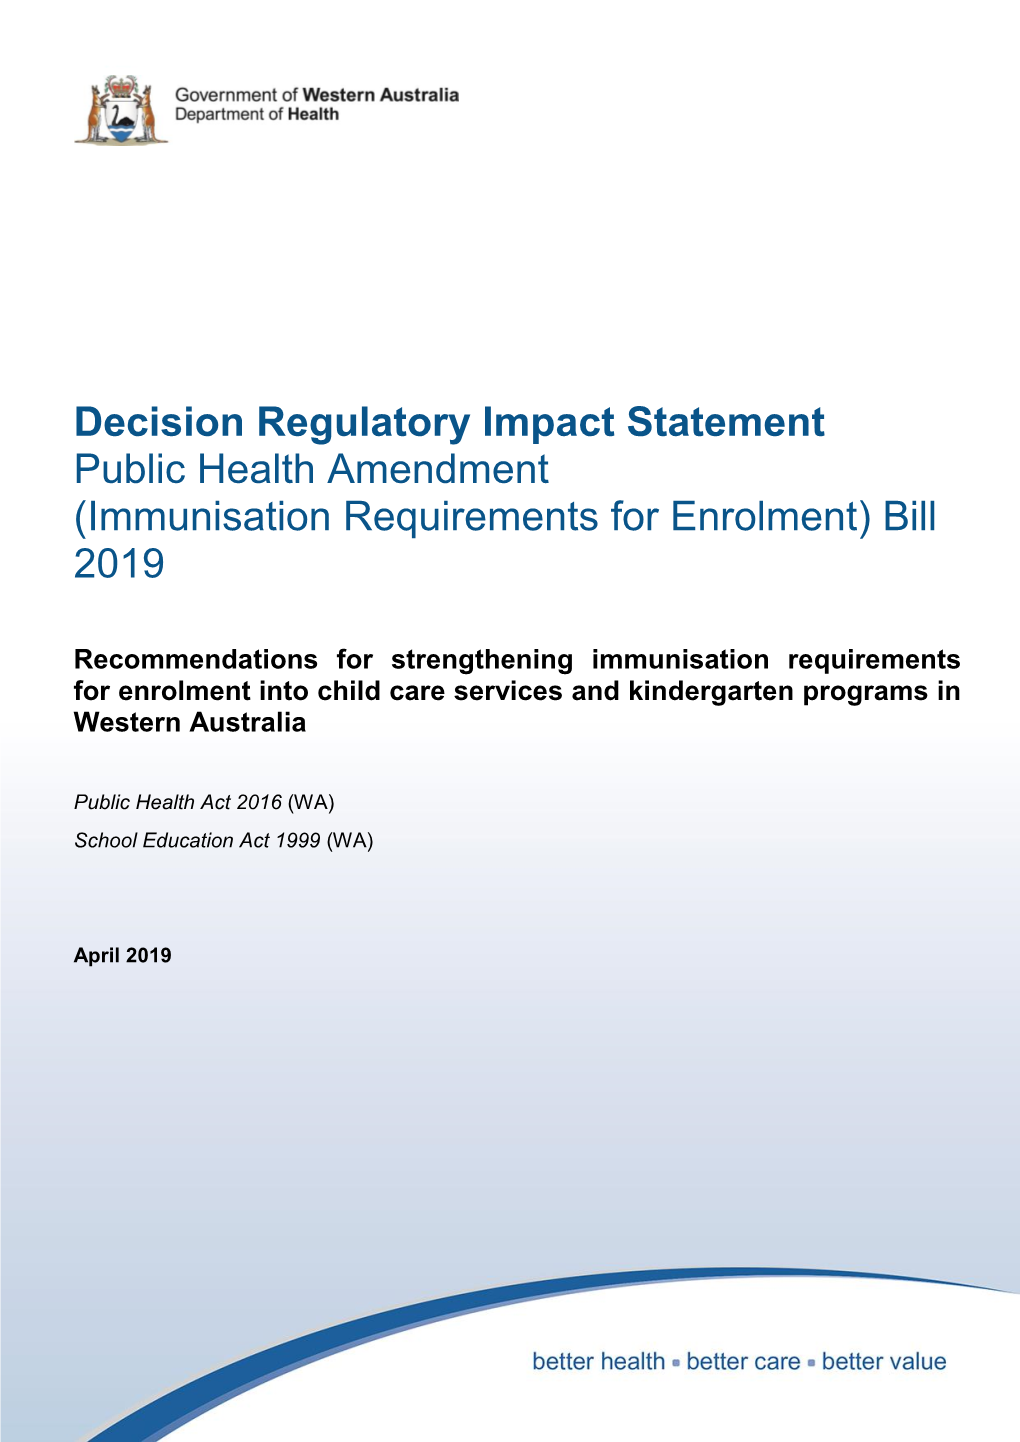 (Immunisation Requirements for Enrolment) Bill 2019